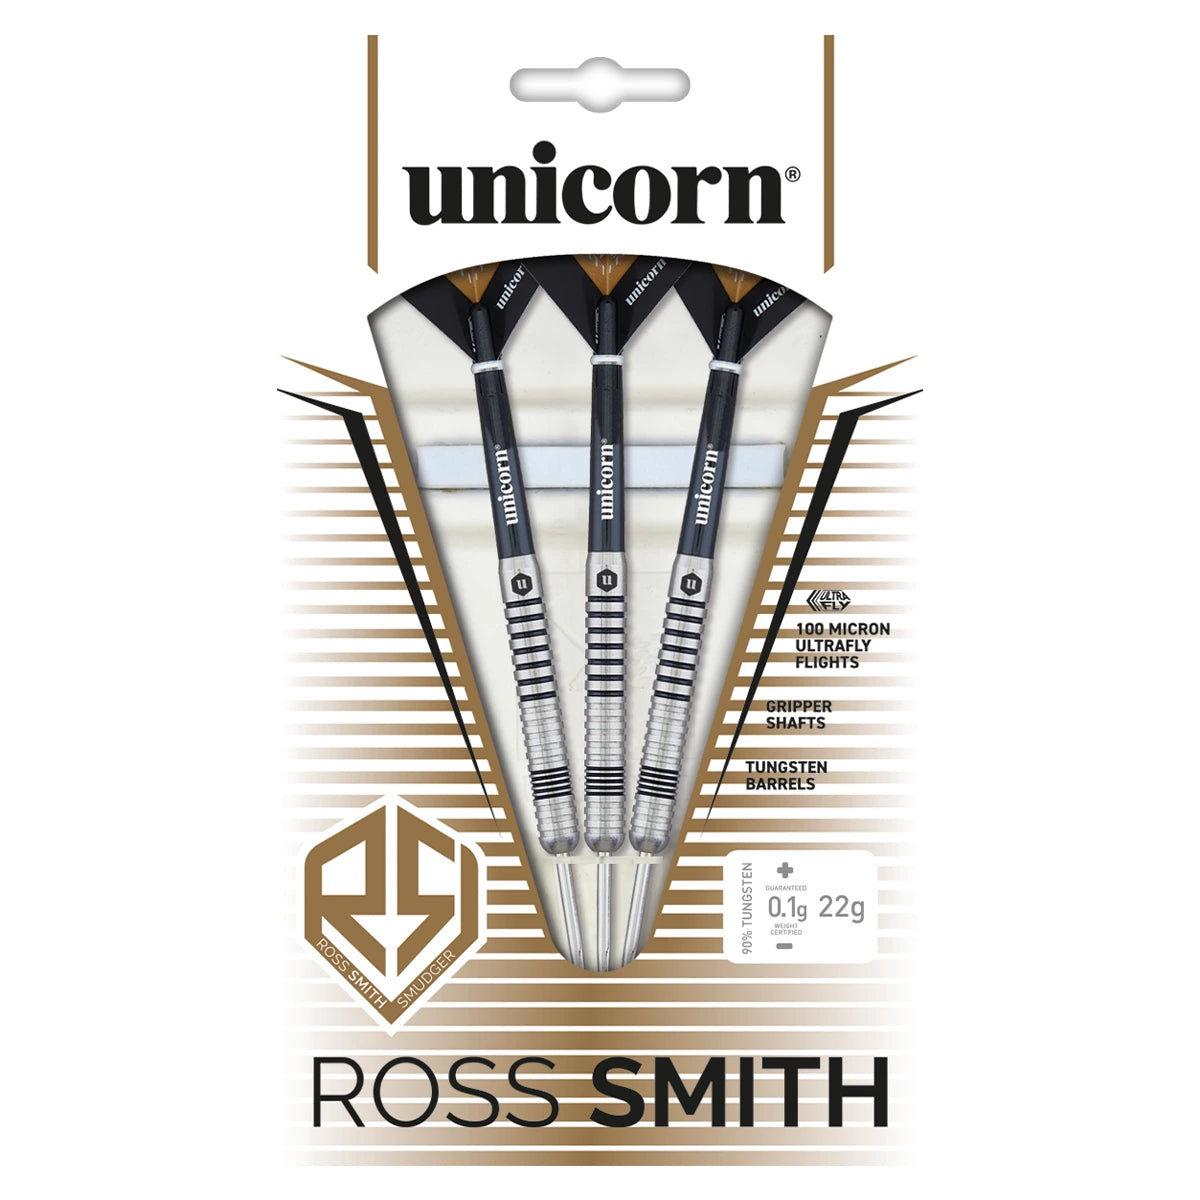 Unicorn Ross Smith Smudger 80% Tungsten 22g Darts